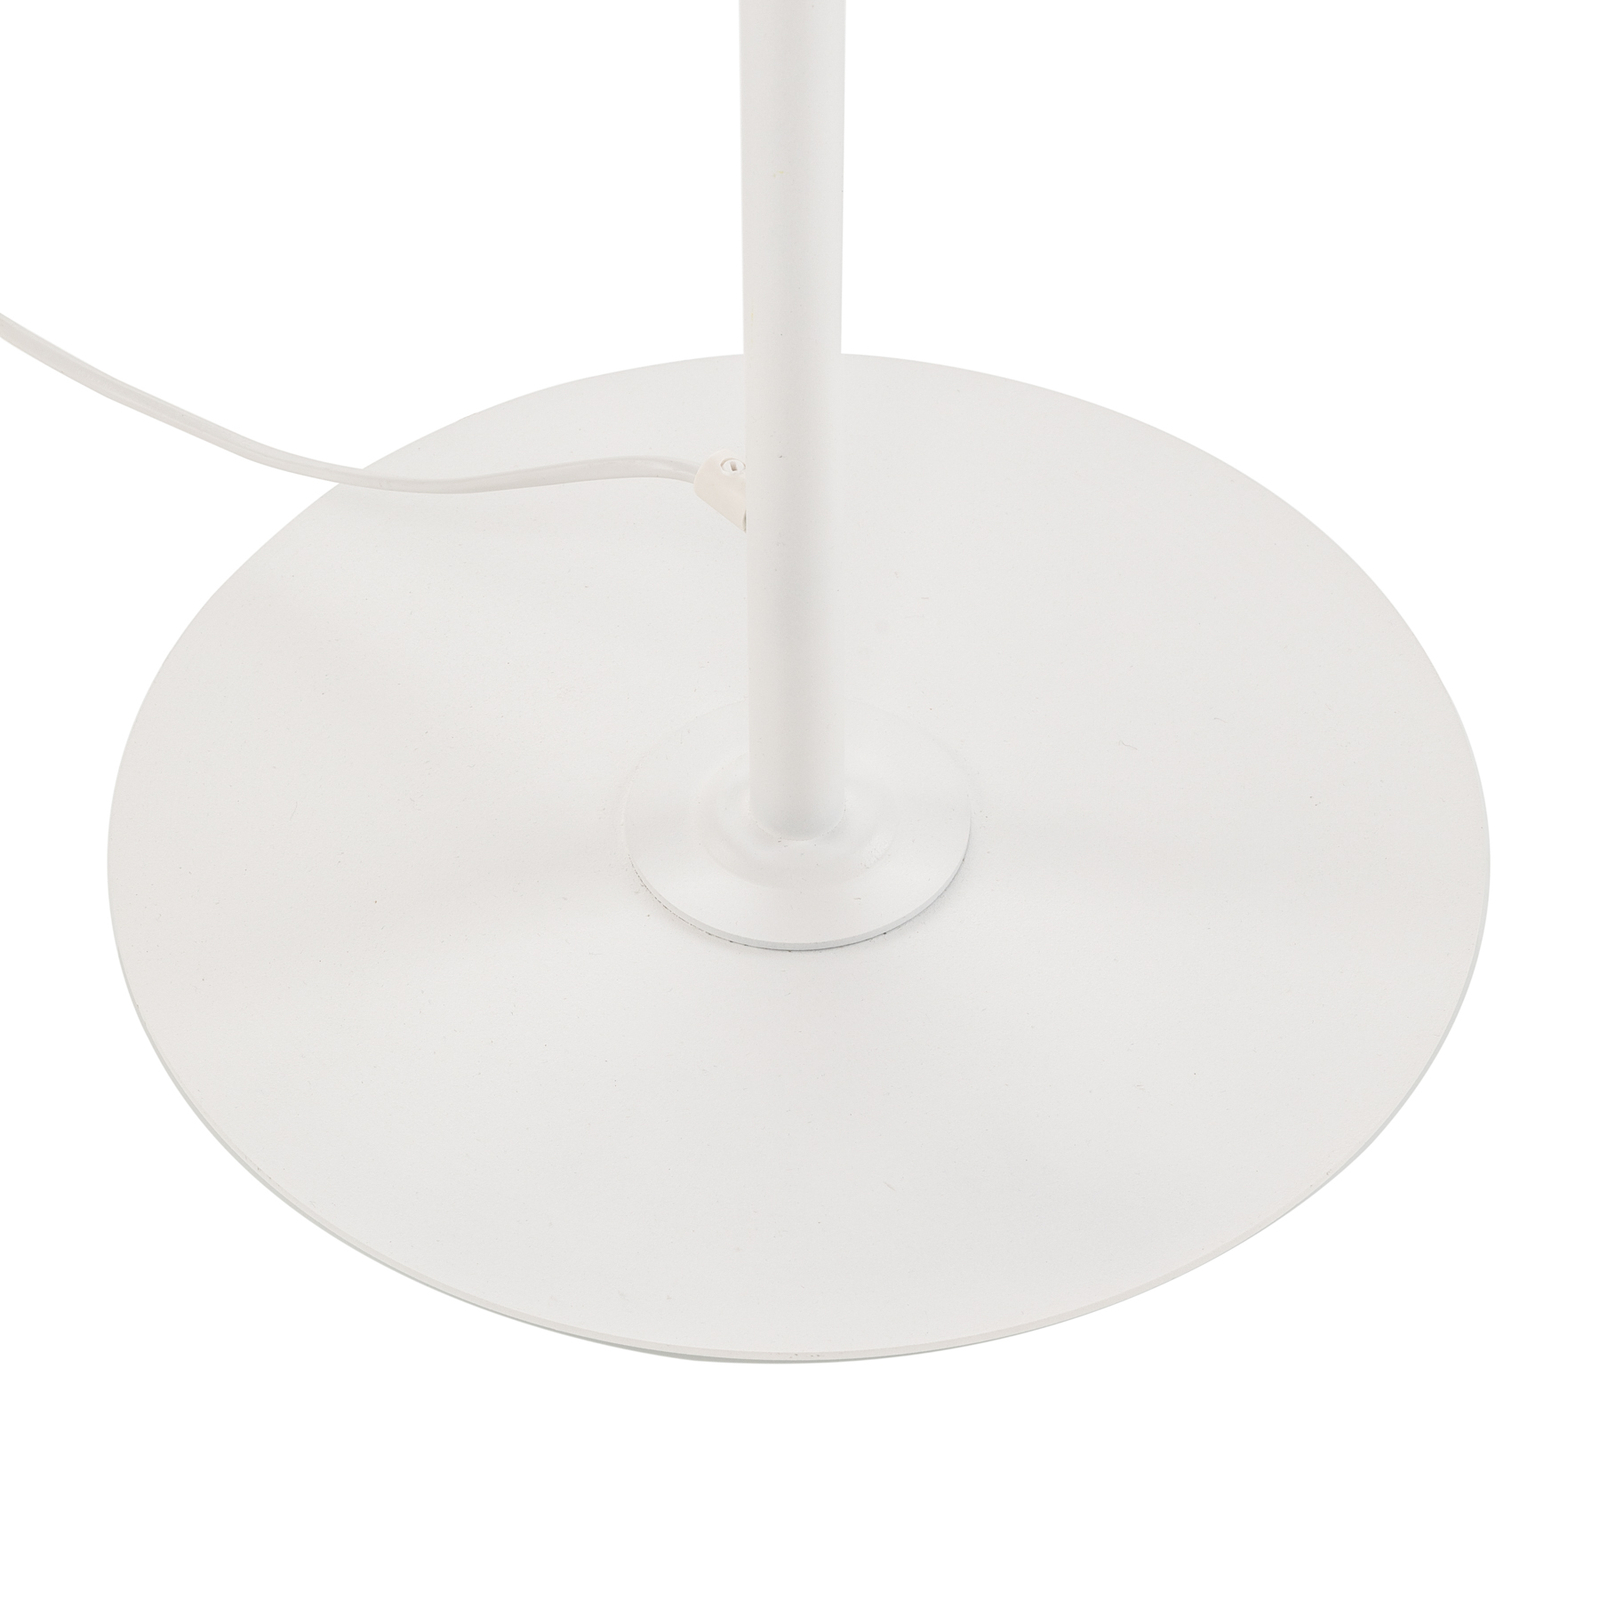 Bot floor lamp, white, three-bulb